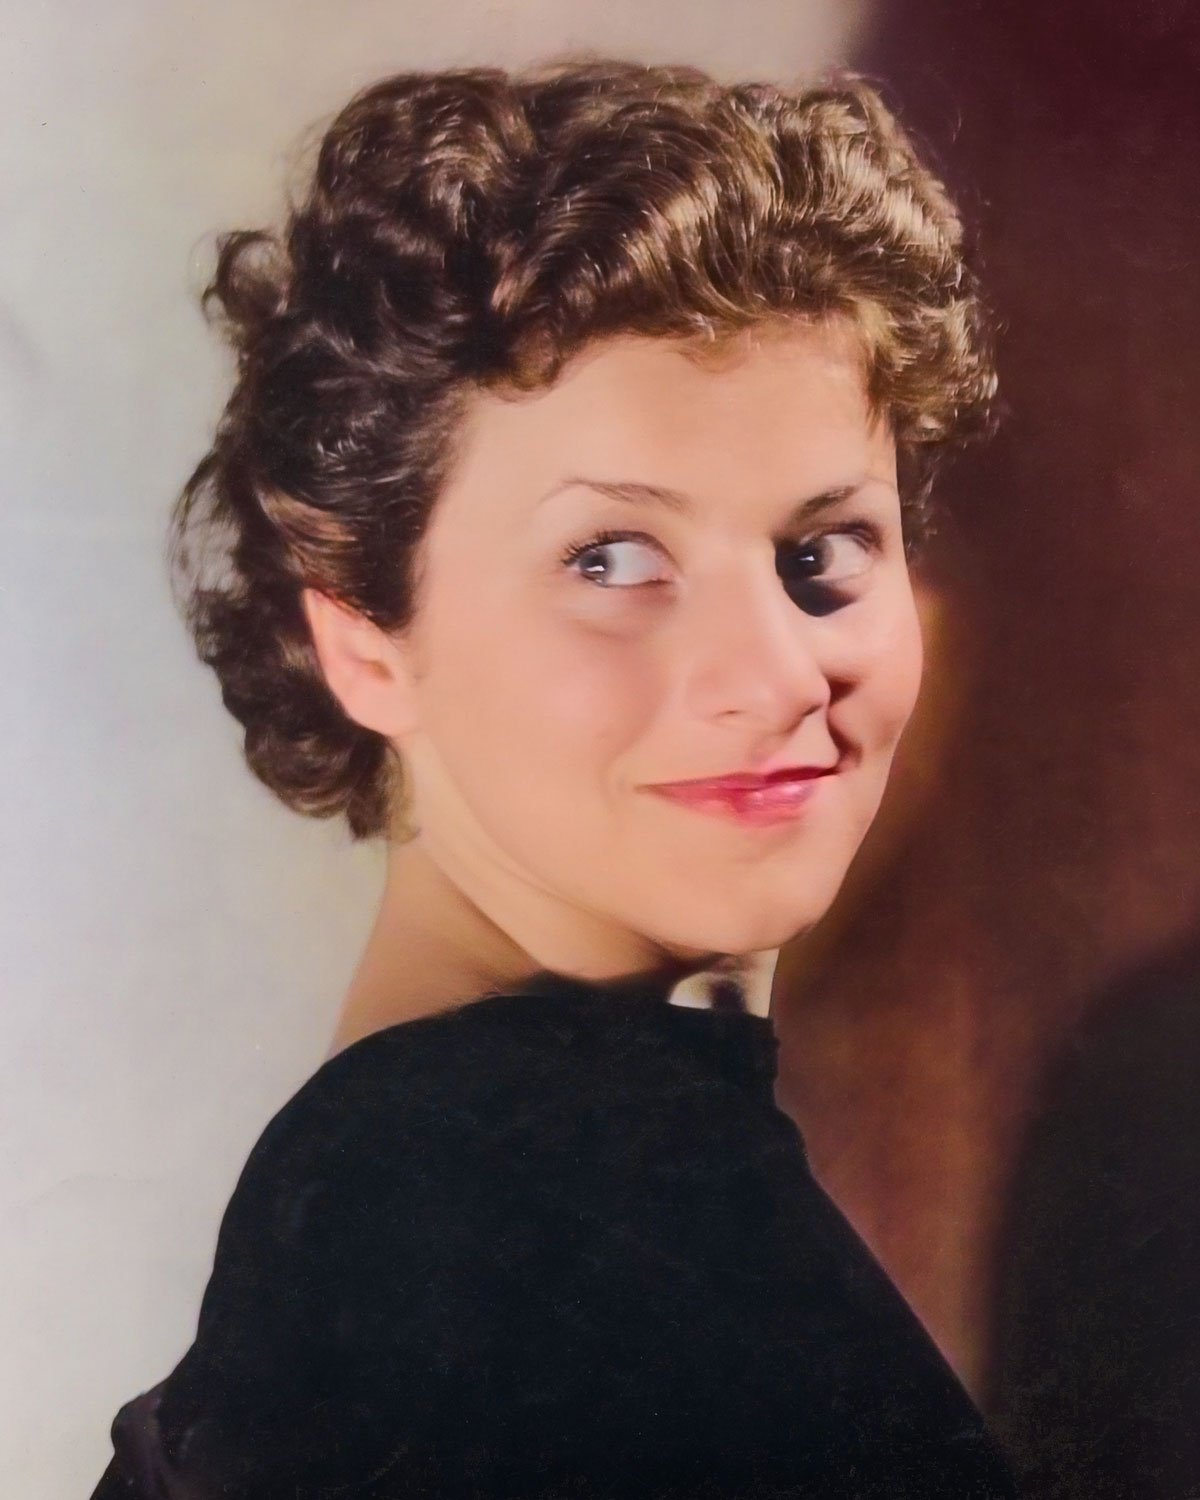 Viola Spolin pictured in the 1930s